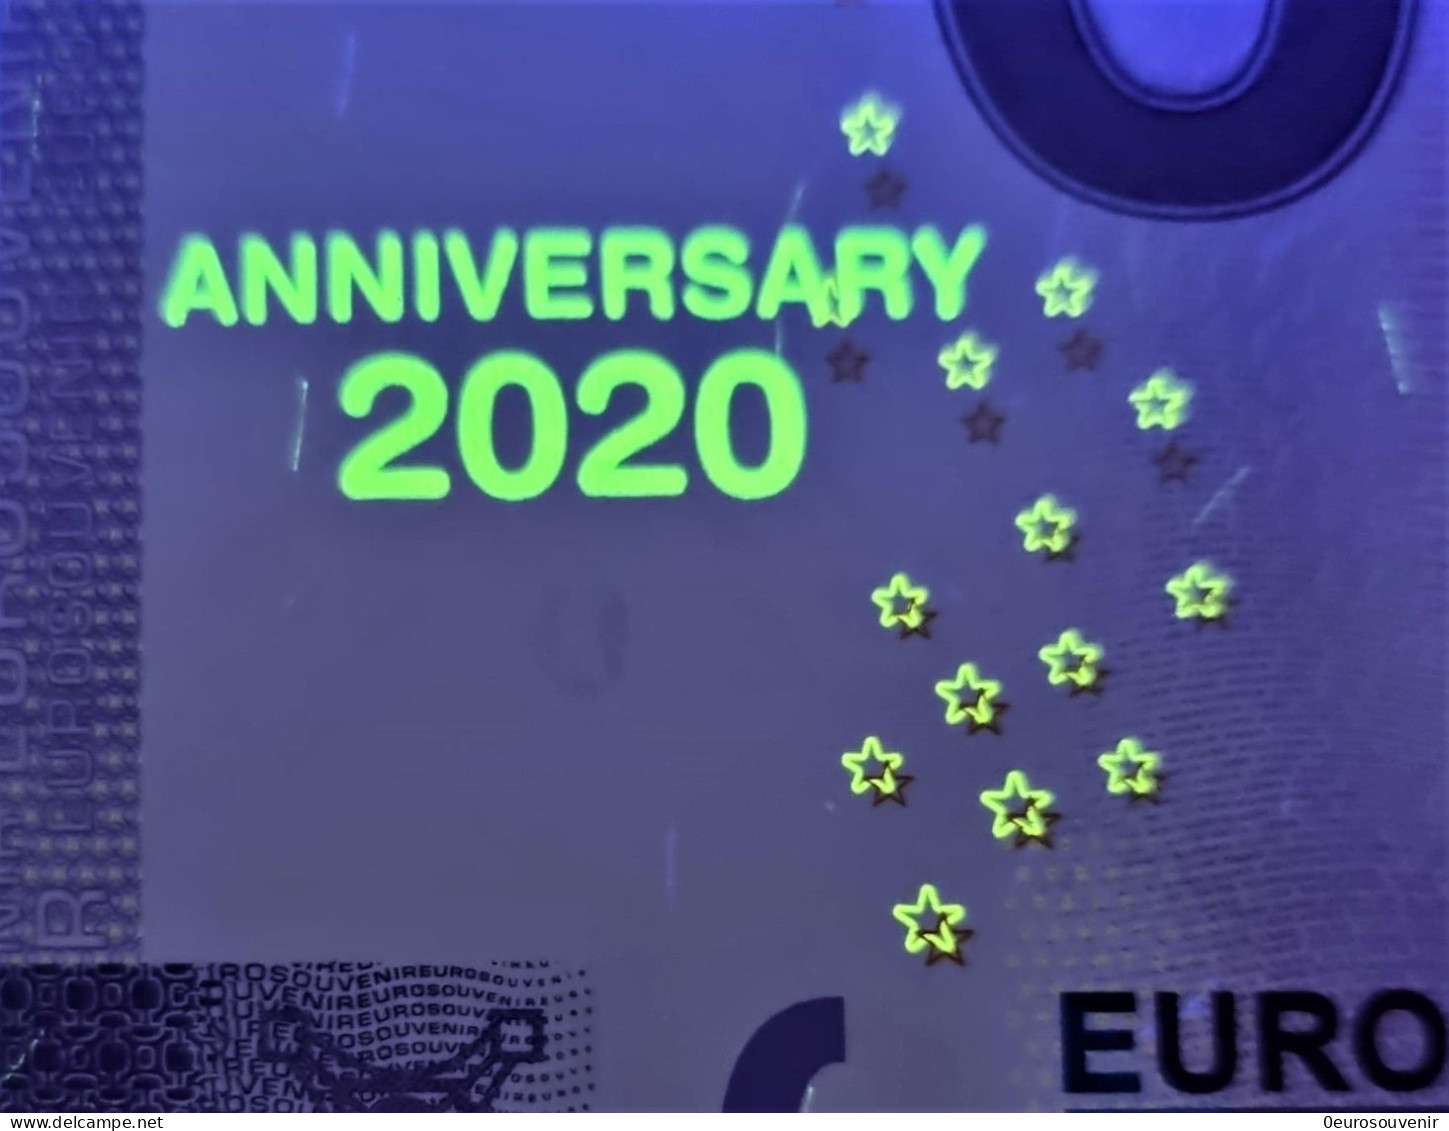 0-Euro XEJP 2020-3 ALLWETTERZOO MÜNSTER Set NORMAL+ANNIVERSARY - Privatentwürfe